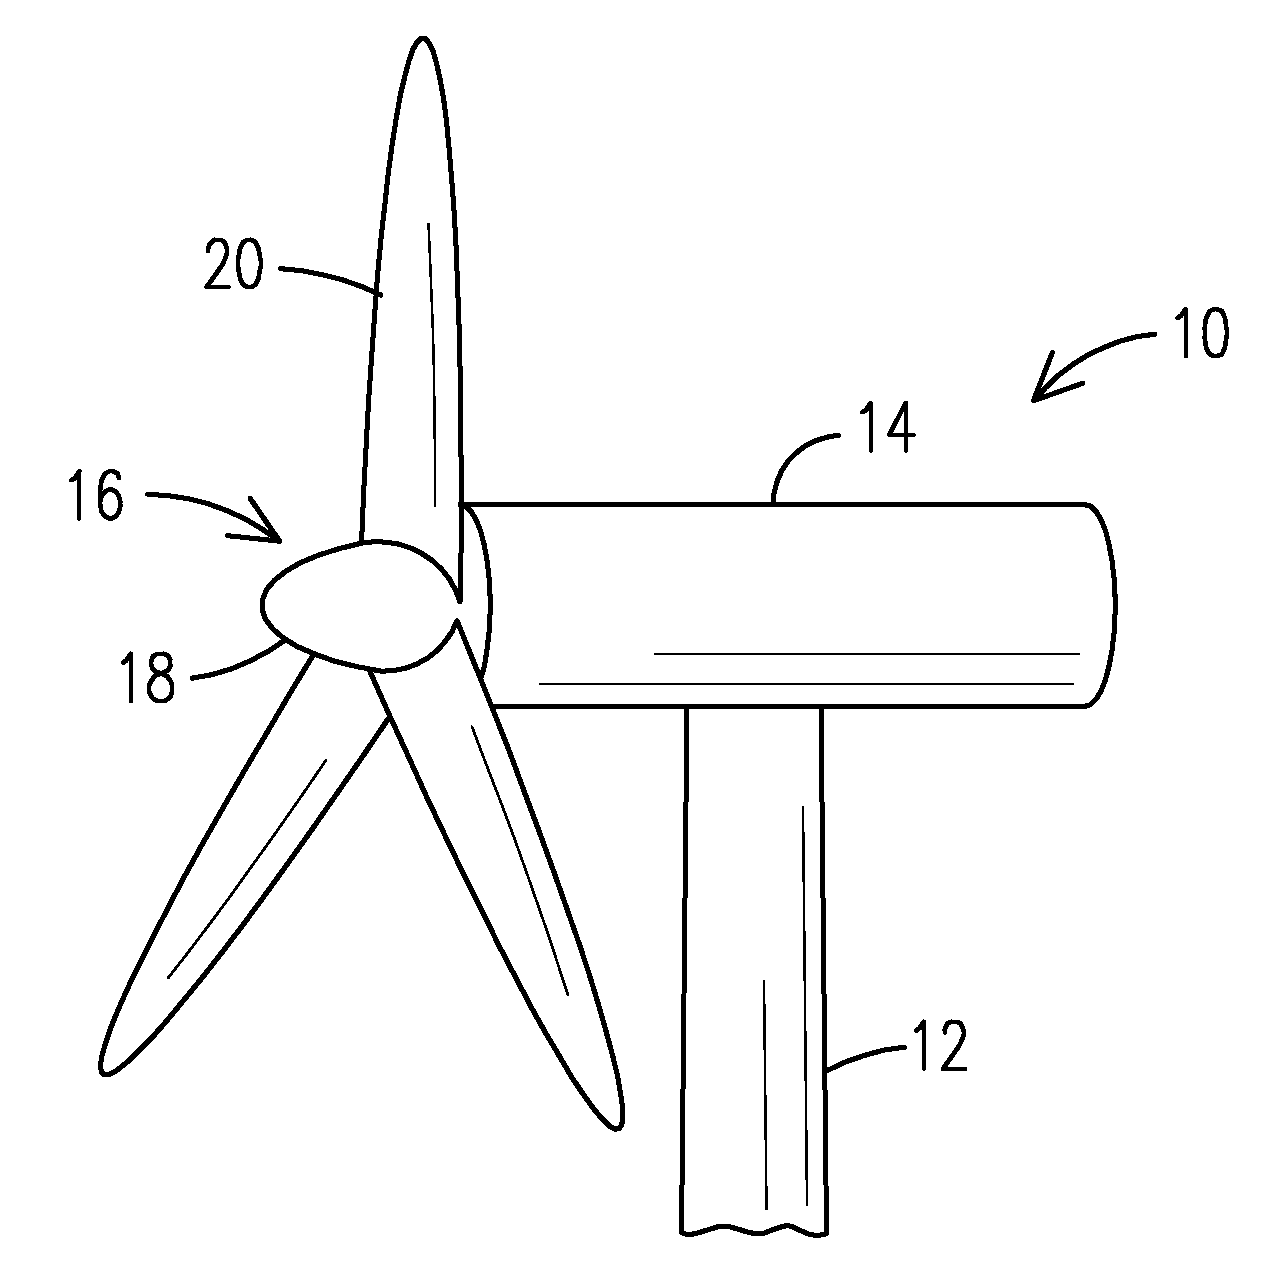 Load mitigation device for wind turbine blades